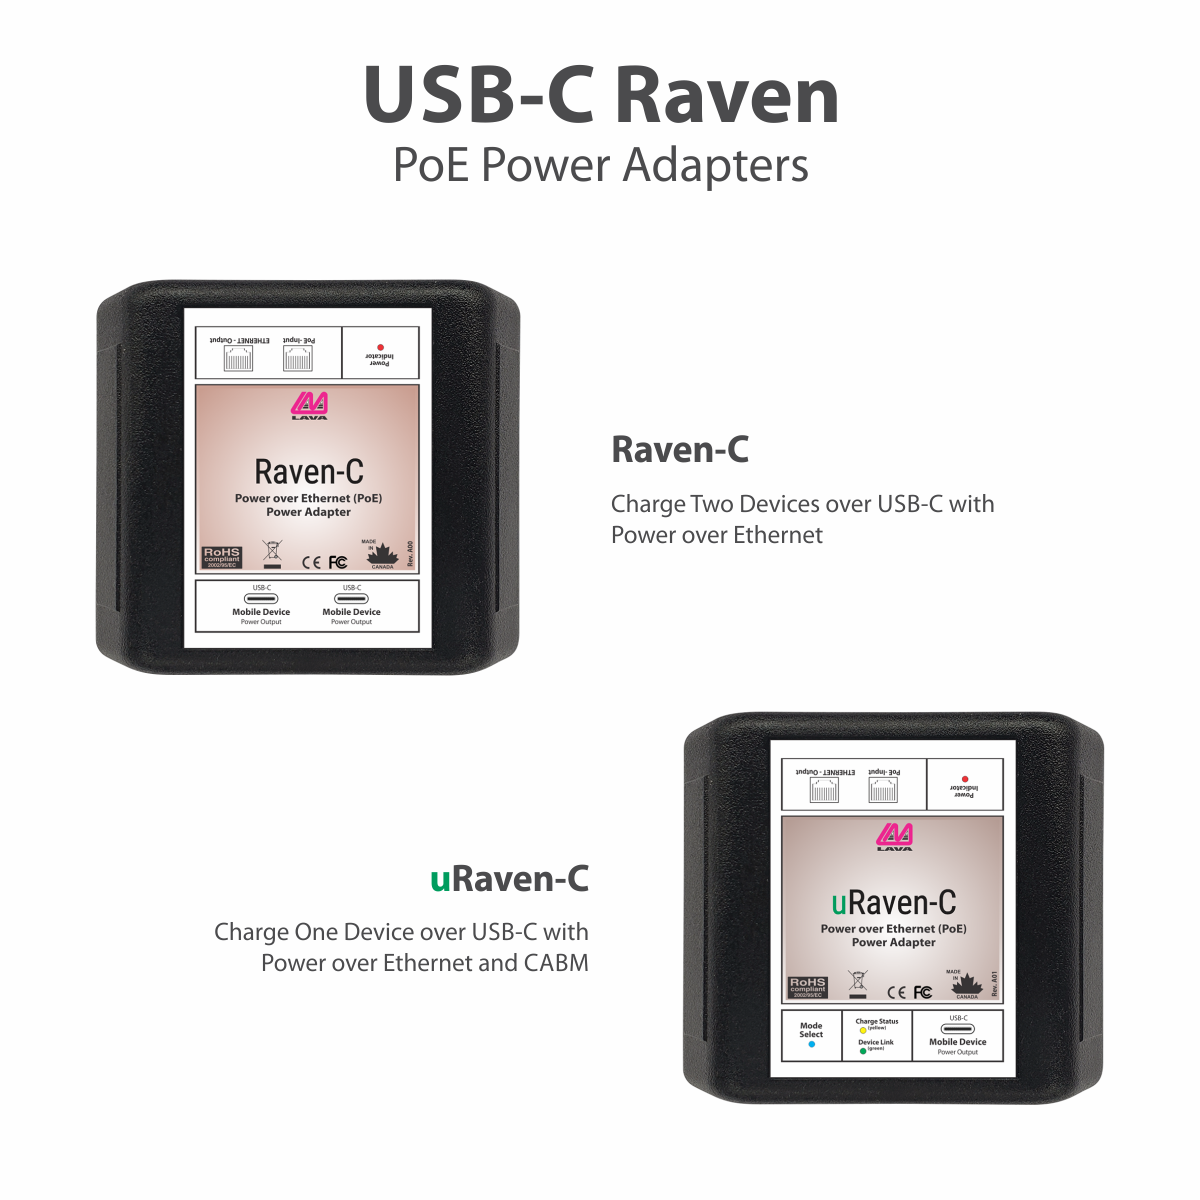 Raven-C and uRaven-C PoE Power Adapters